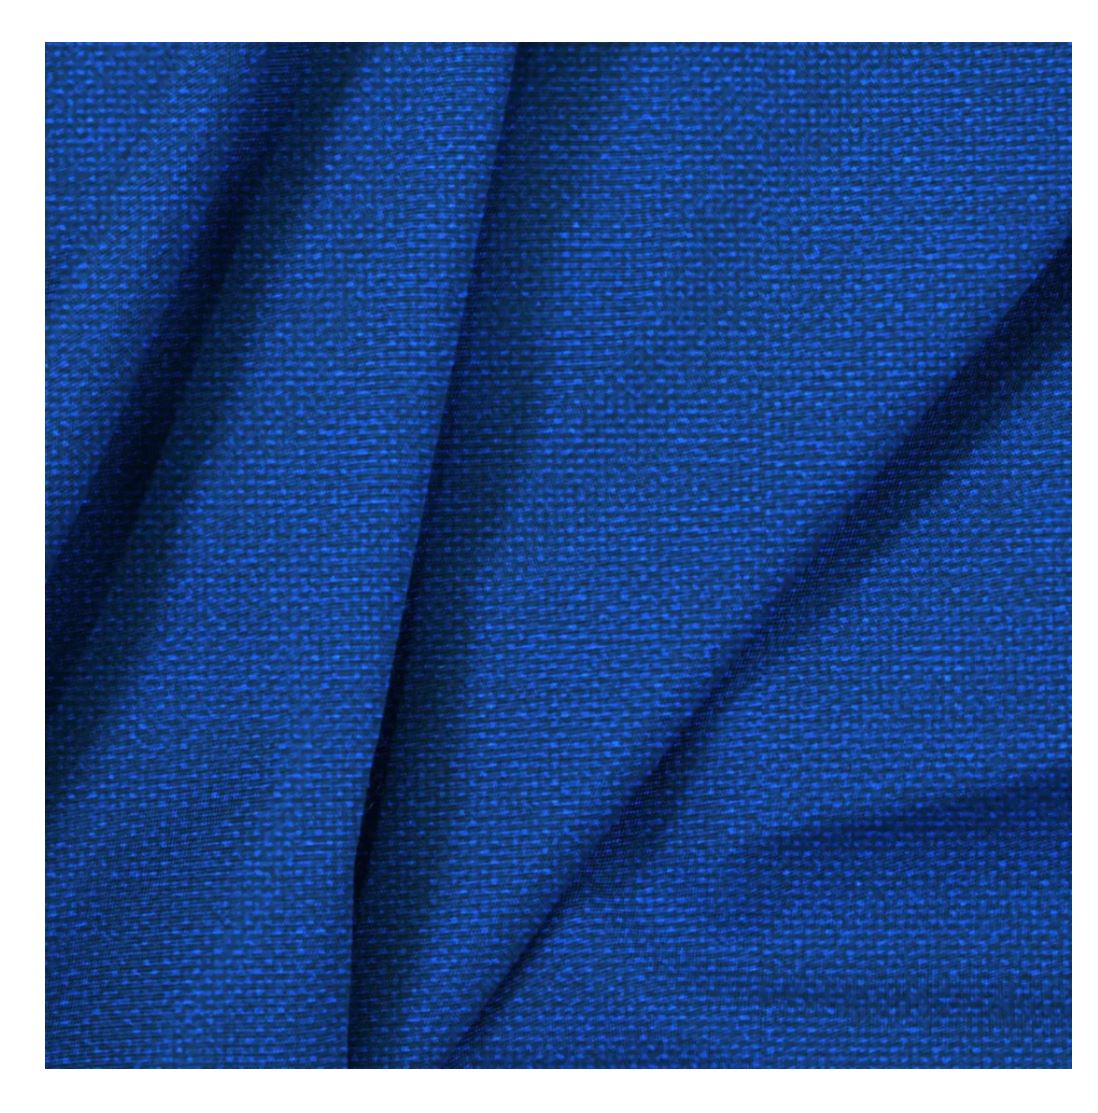 Blue Canvas buddabda cover